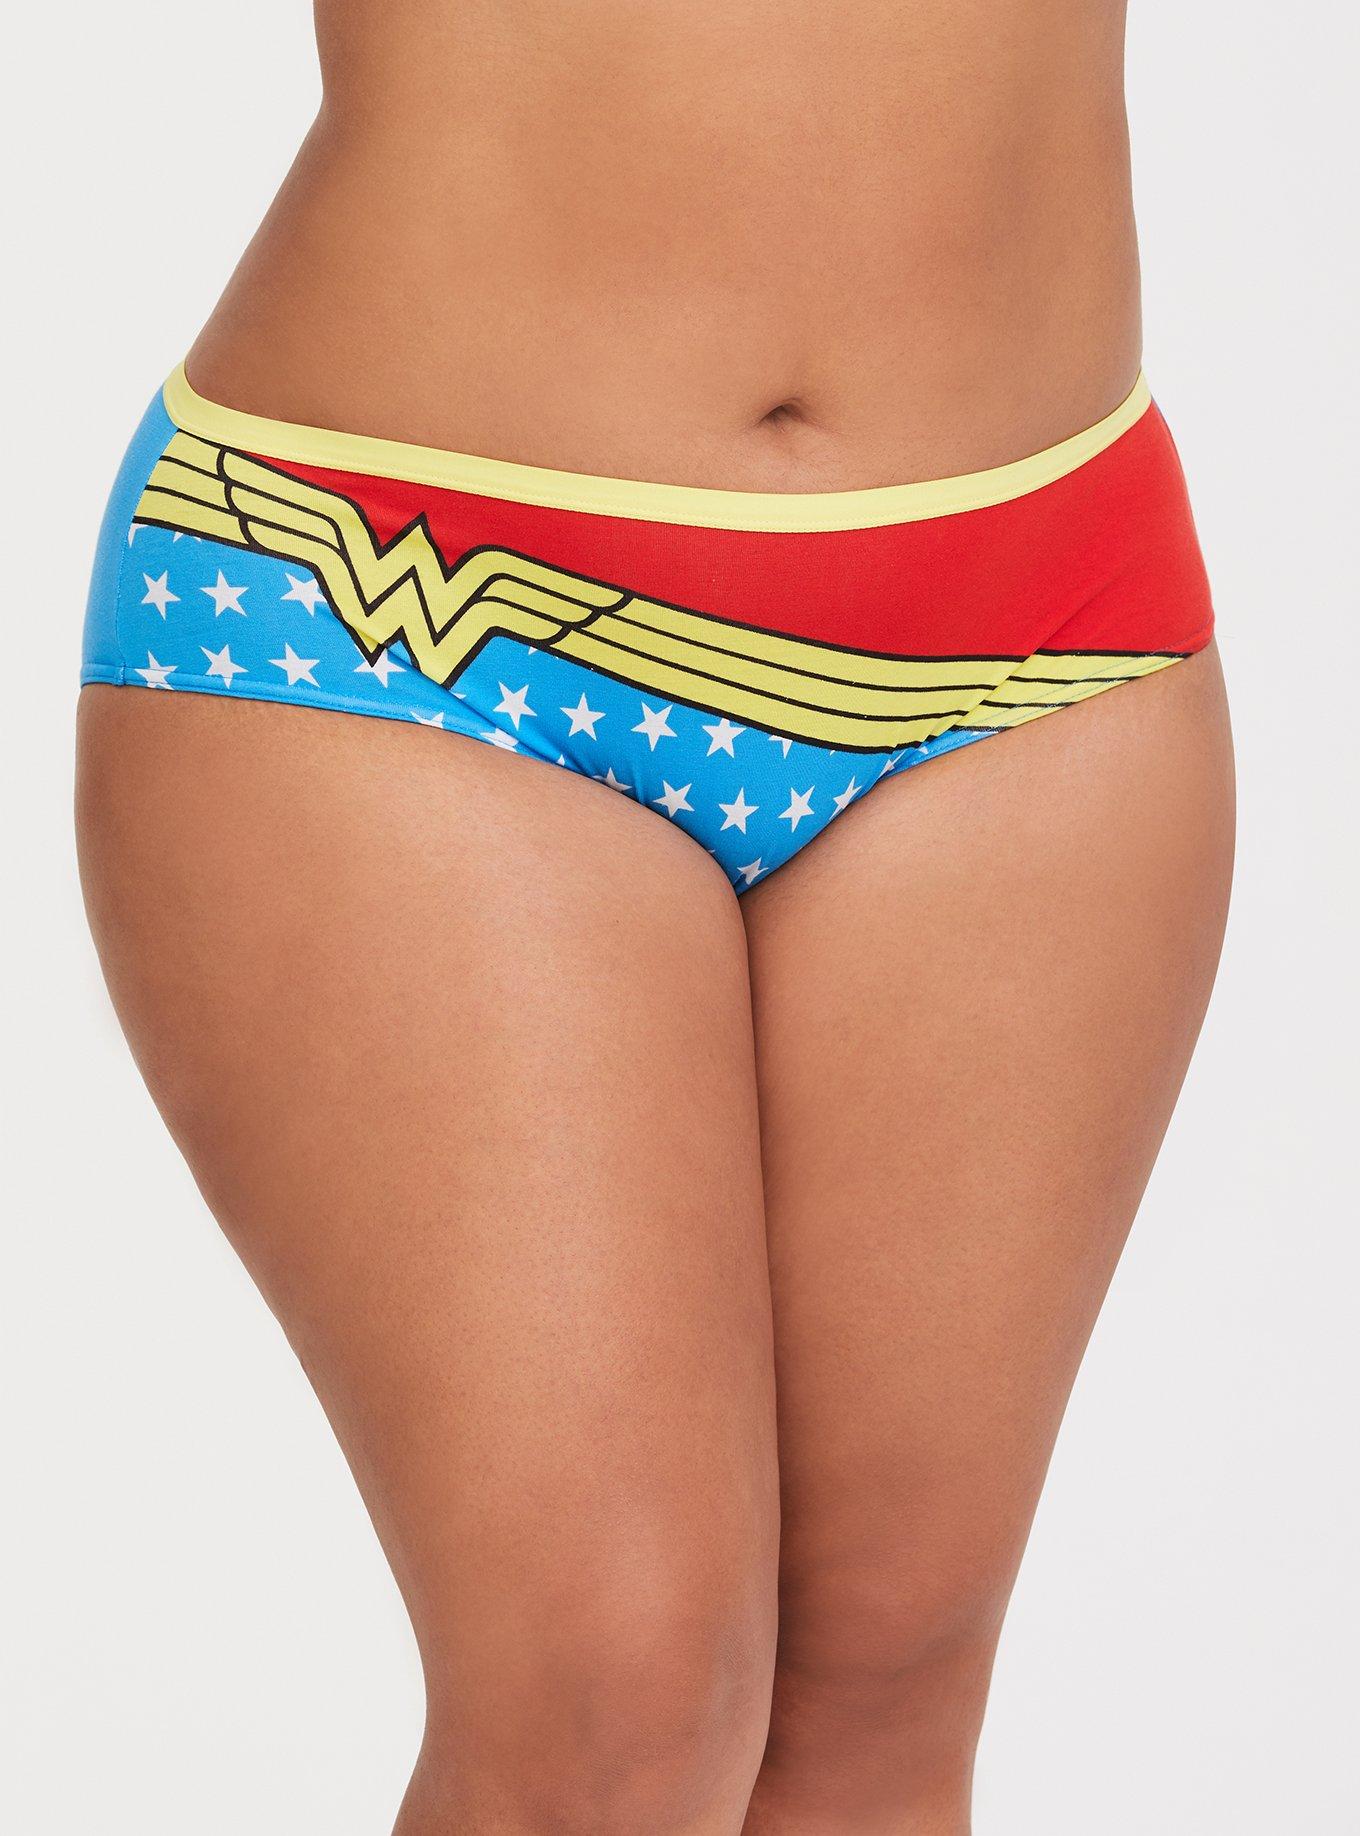 Plus Size - DC Comics Wonder Woman Logo Black Cotton Hipster Panty - Torrid